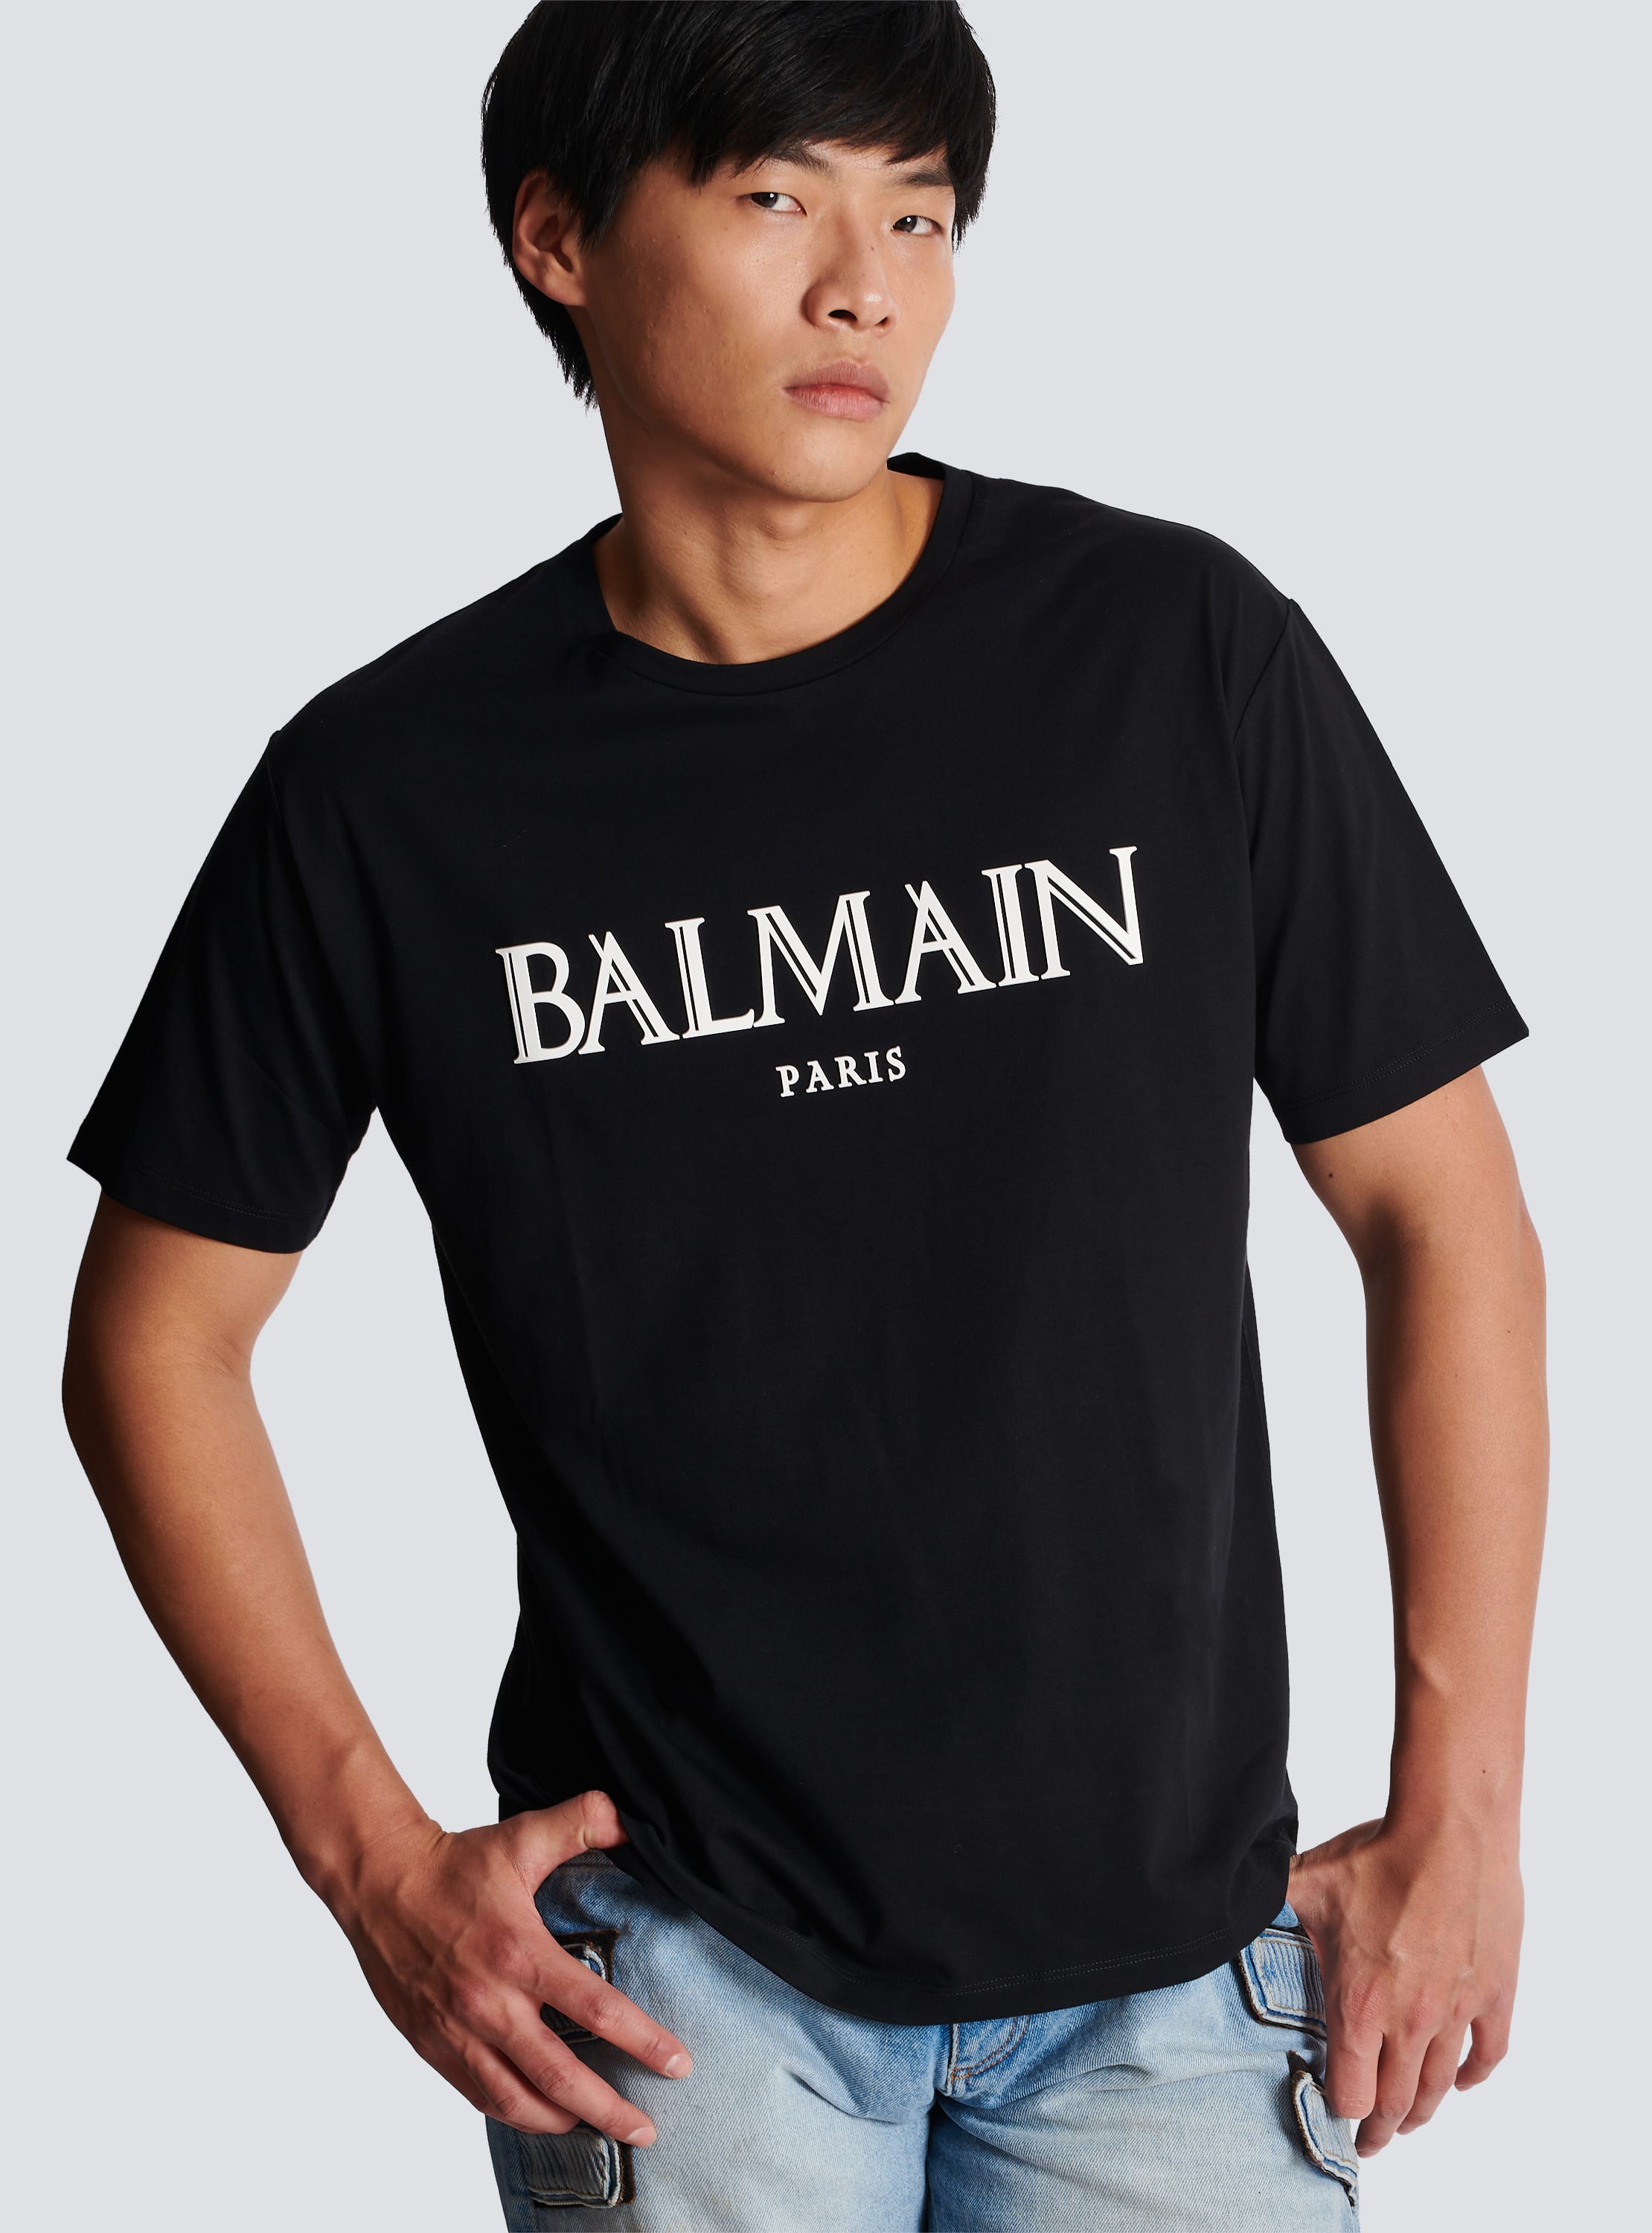 BALMAIN Tシャツ